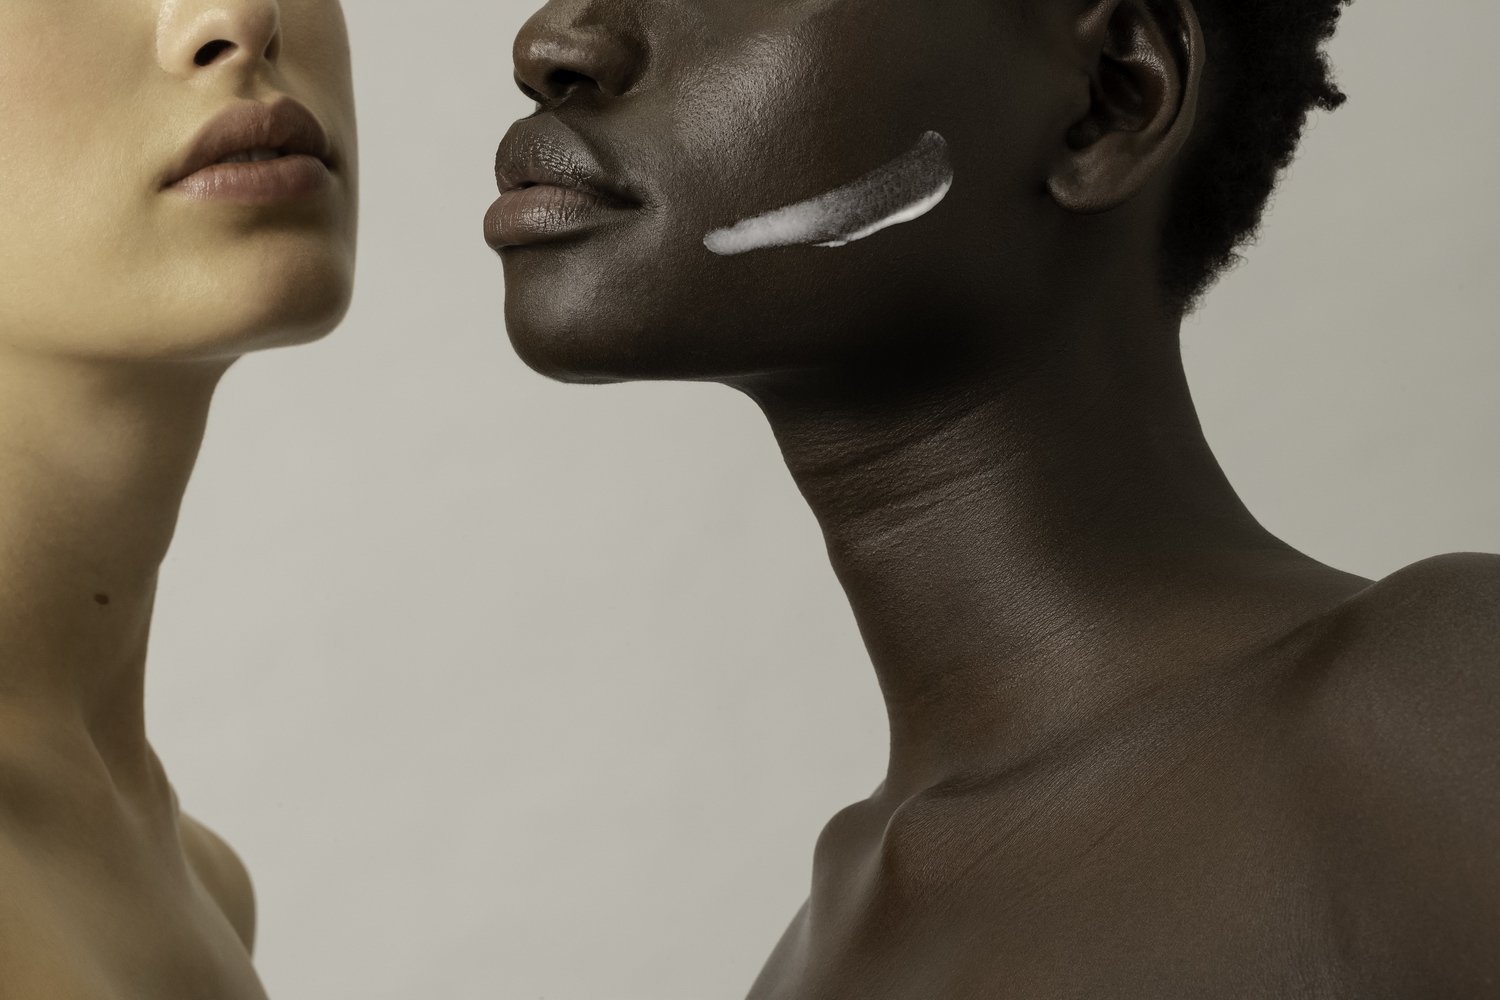 The Glow - Revitalizing Face Cream